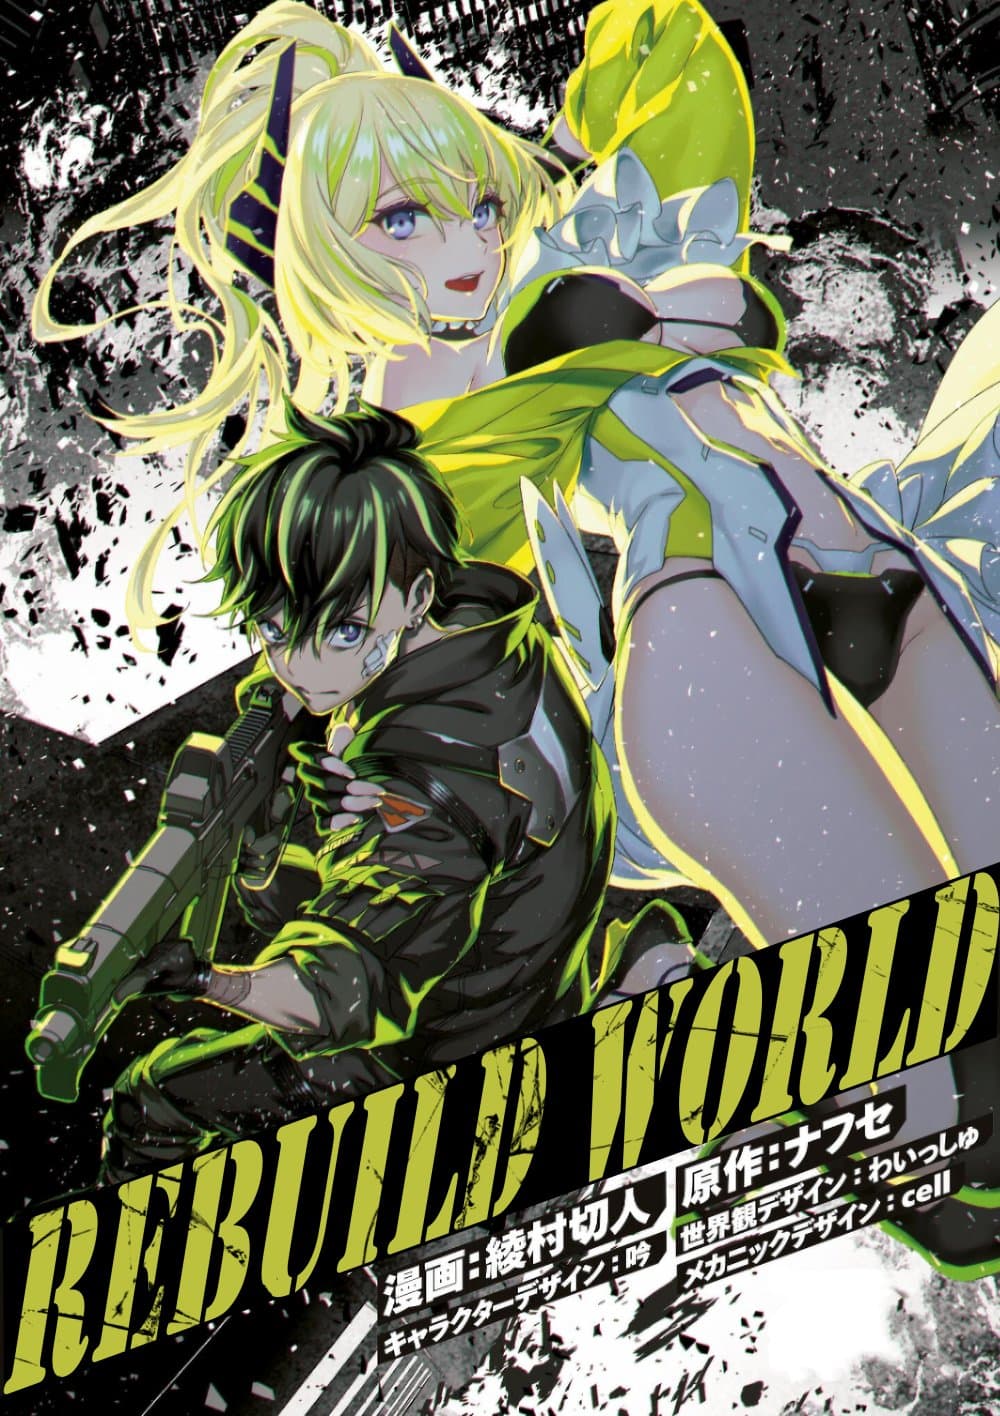 Rebuild World 28 (1)